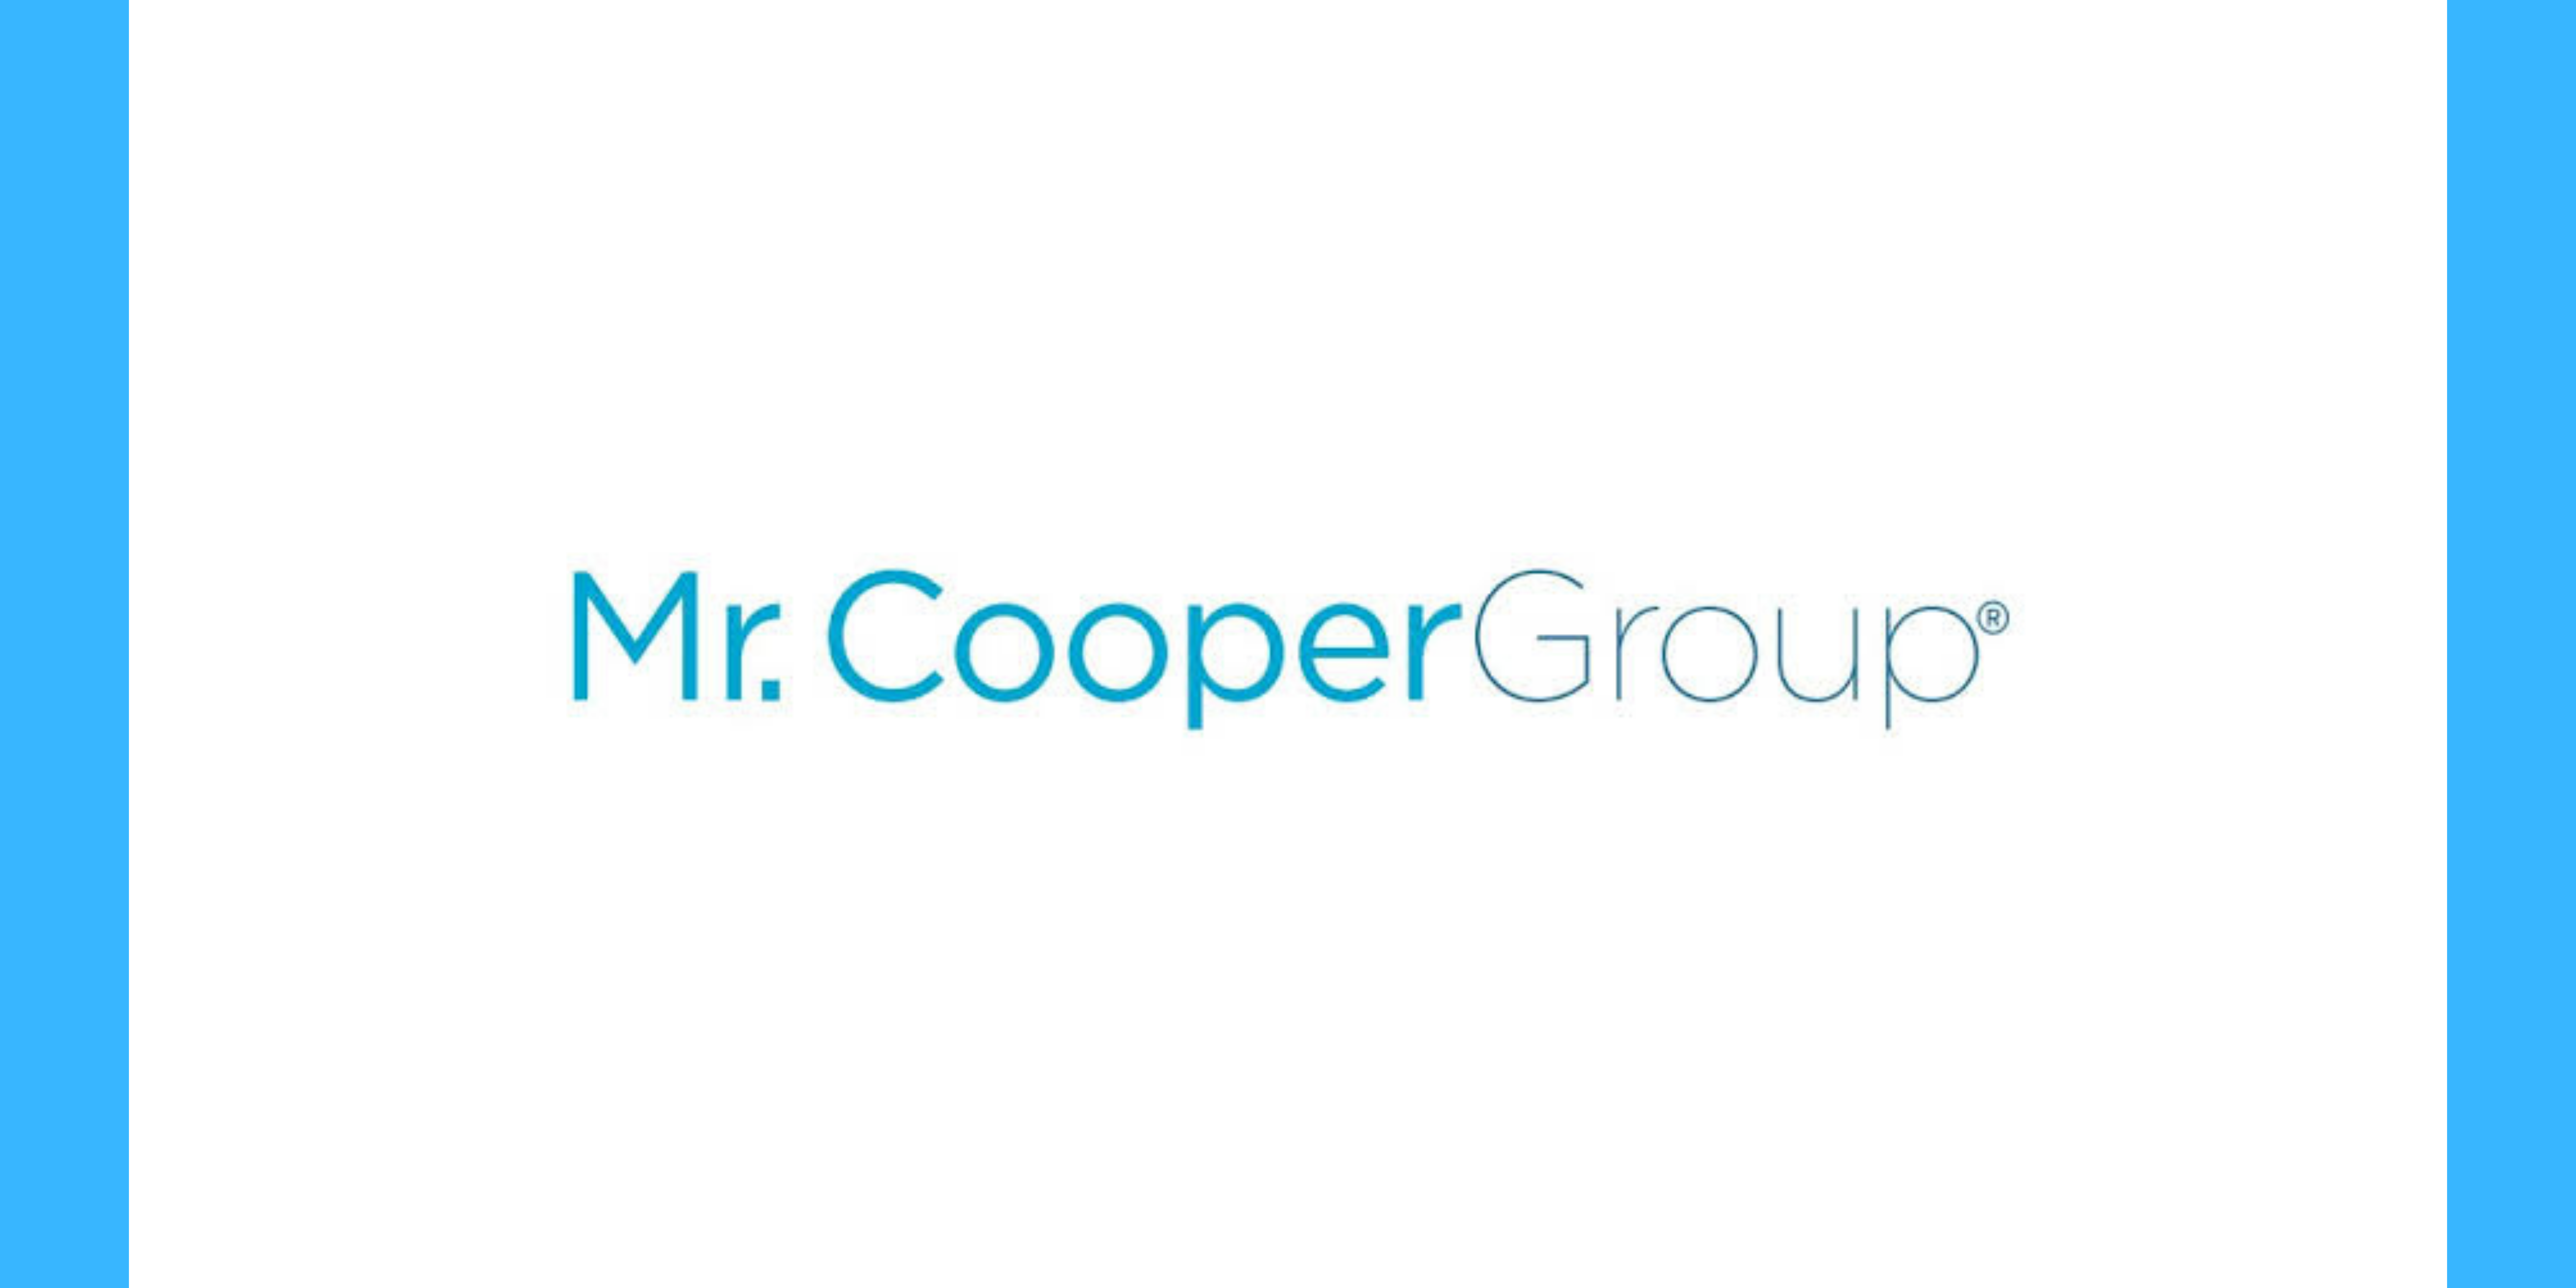 Mr. Cooper Makes C-Suite Changes